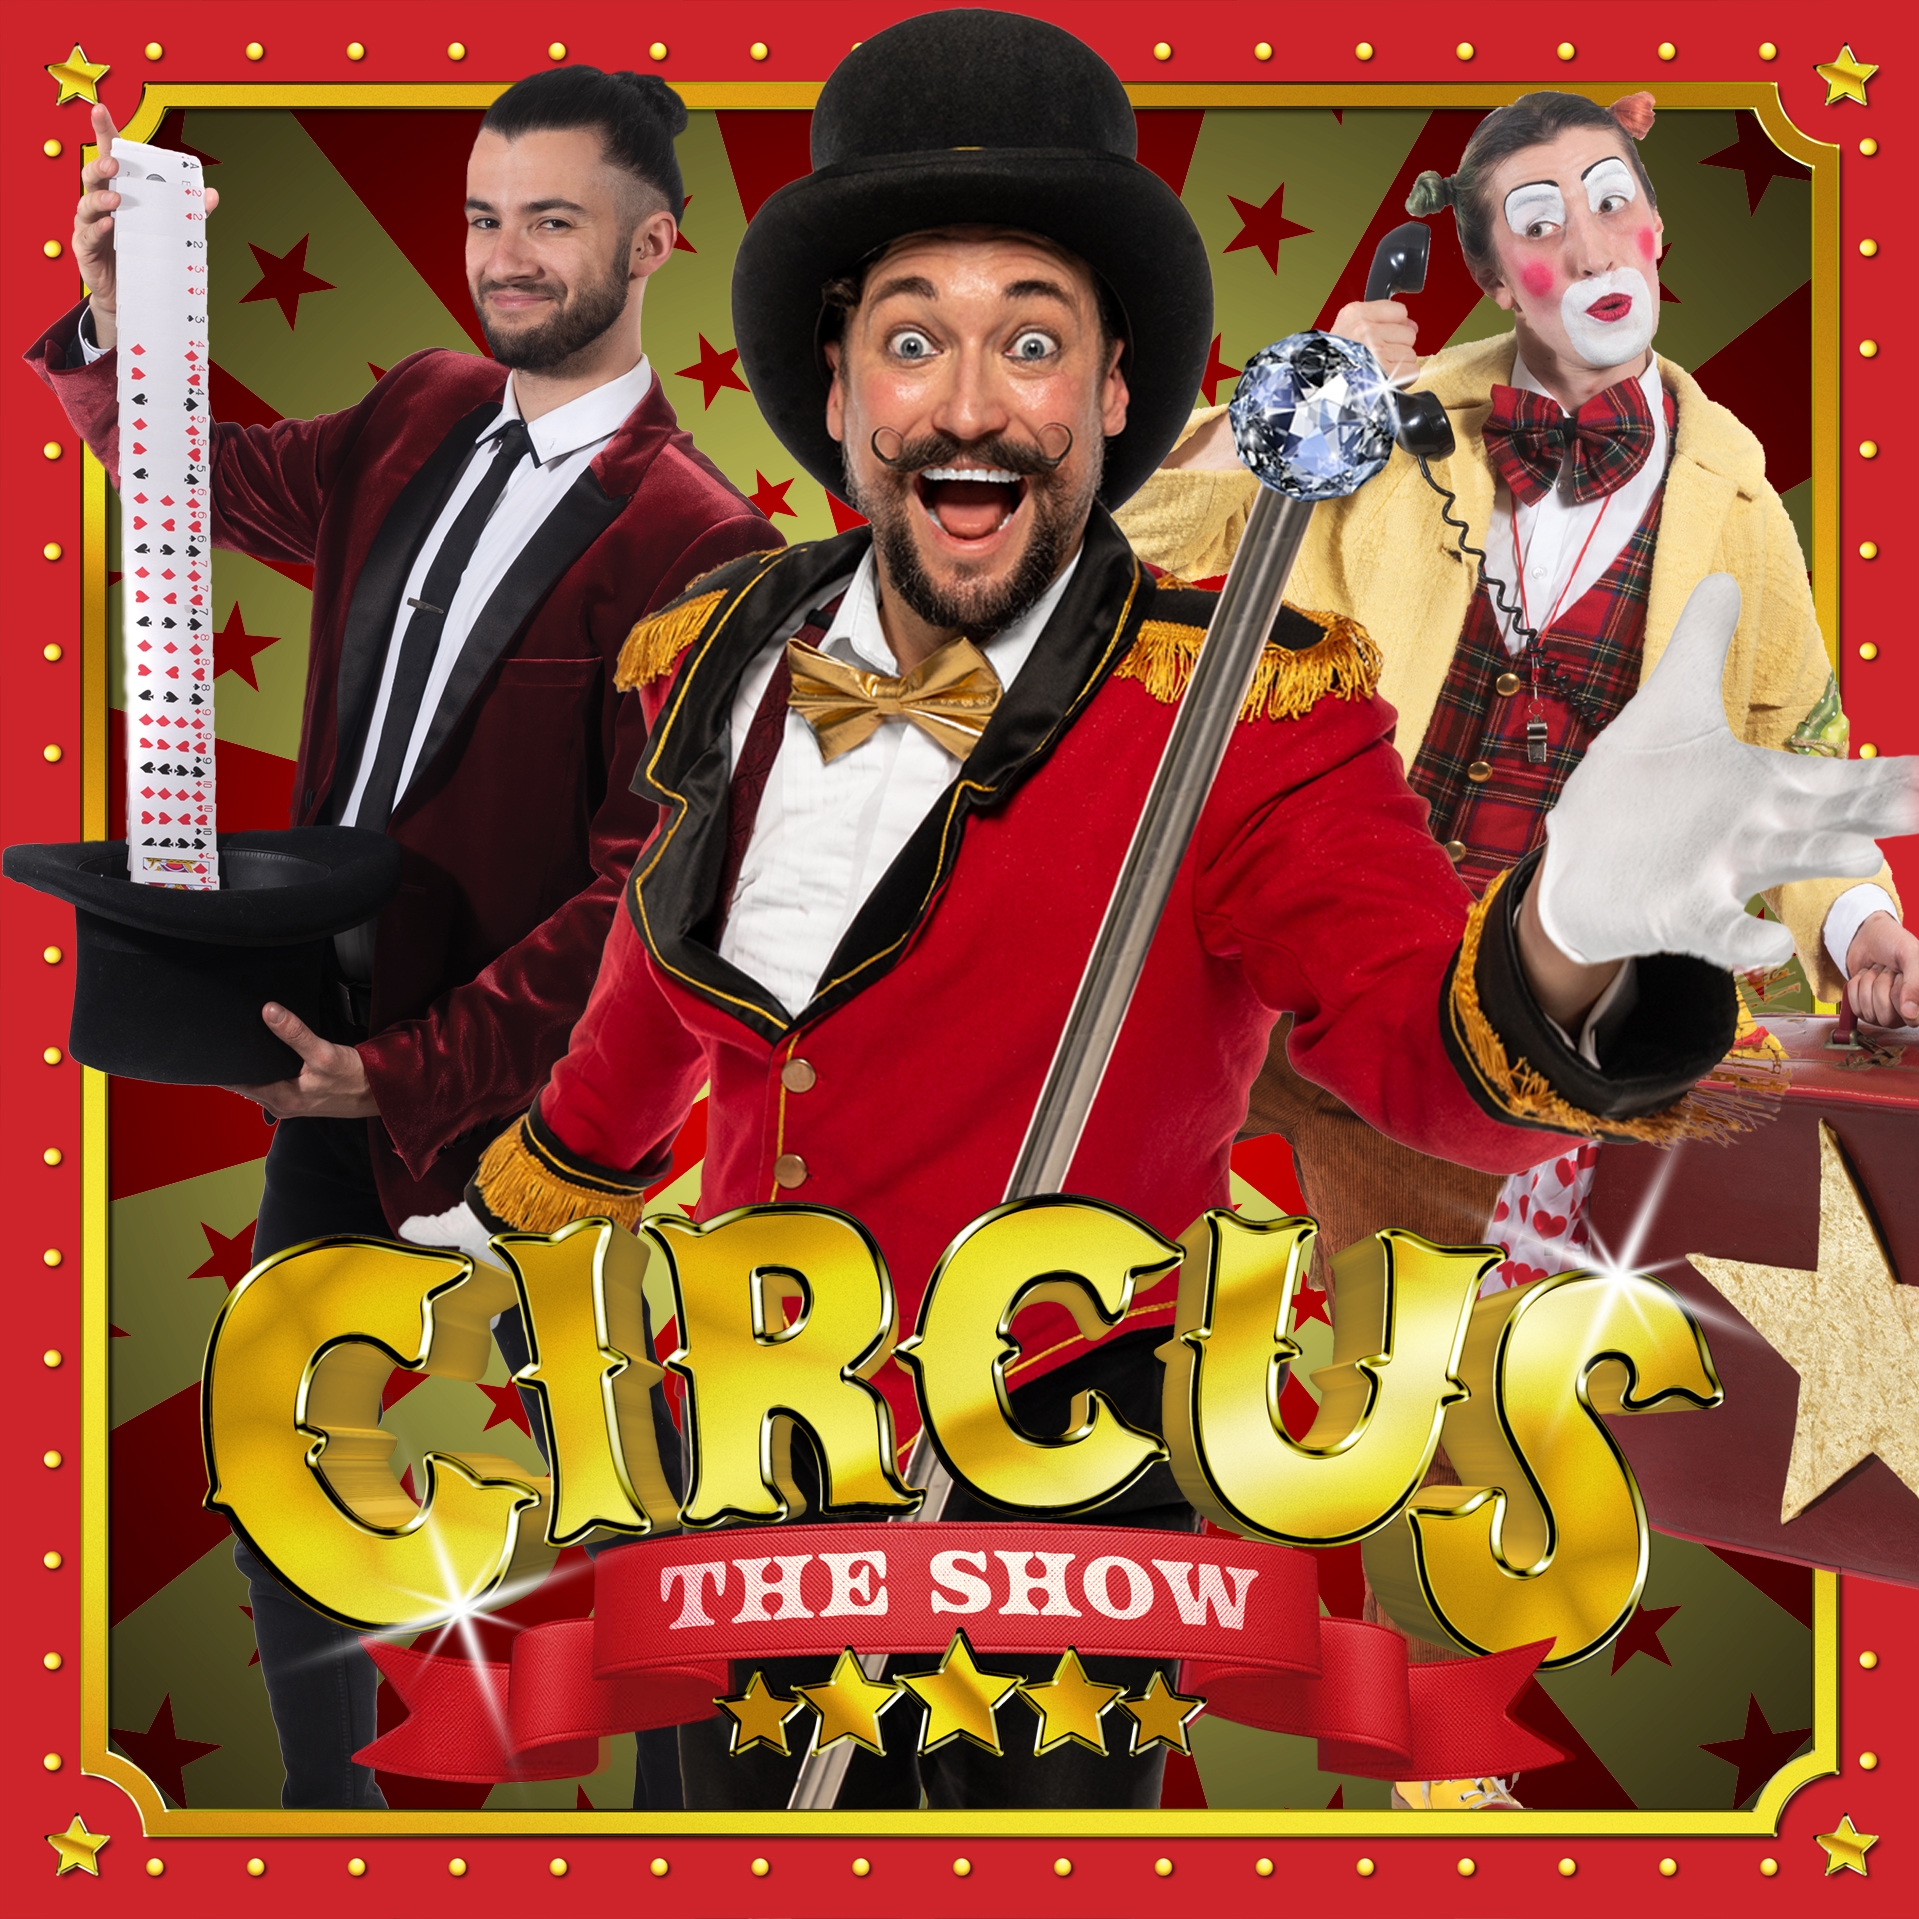 Circus The Show - Theatre Royal Hobart - Children's entertainment 